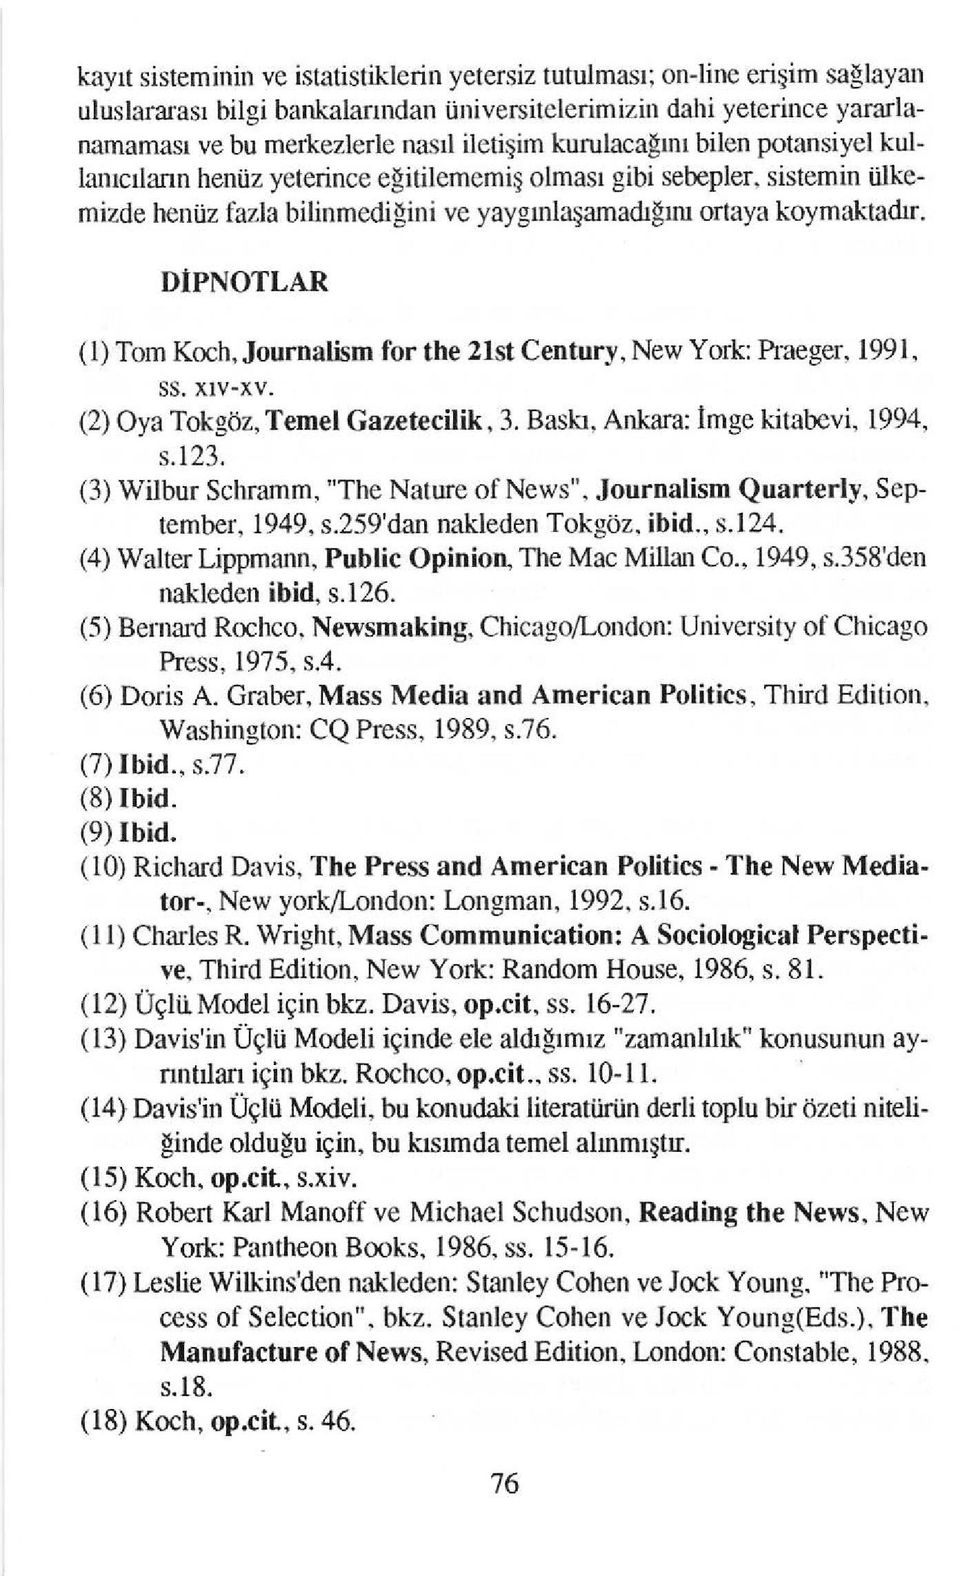 DTPNOTLAR (l) Tom Koch, Journalbm for the 2lst Century, New Yo*: haeger, 1991, ss. xlv-xv. (2) Oya Tokgoz, Temel Gazetecilik, 3. Baskr, Ankara: Imge kitabevi, 1994, s.123.